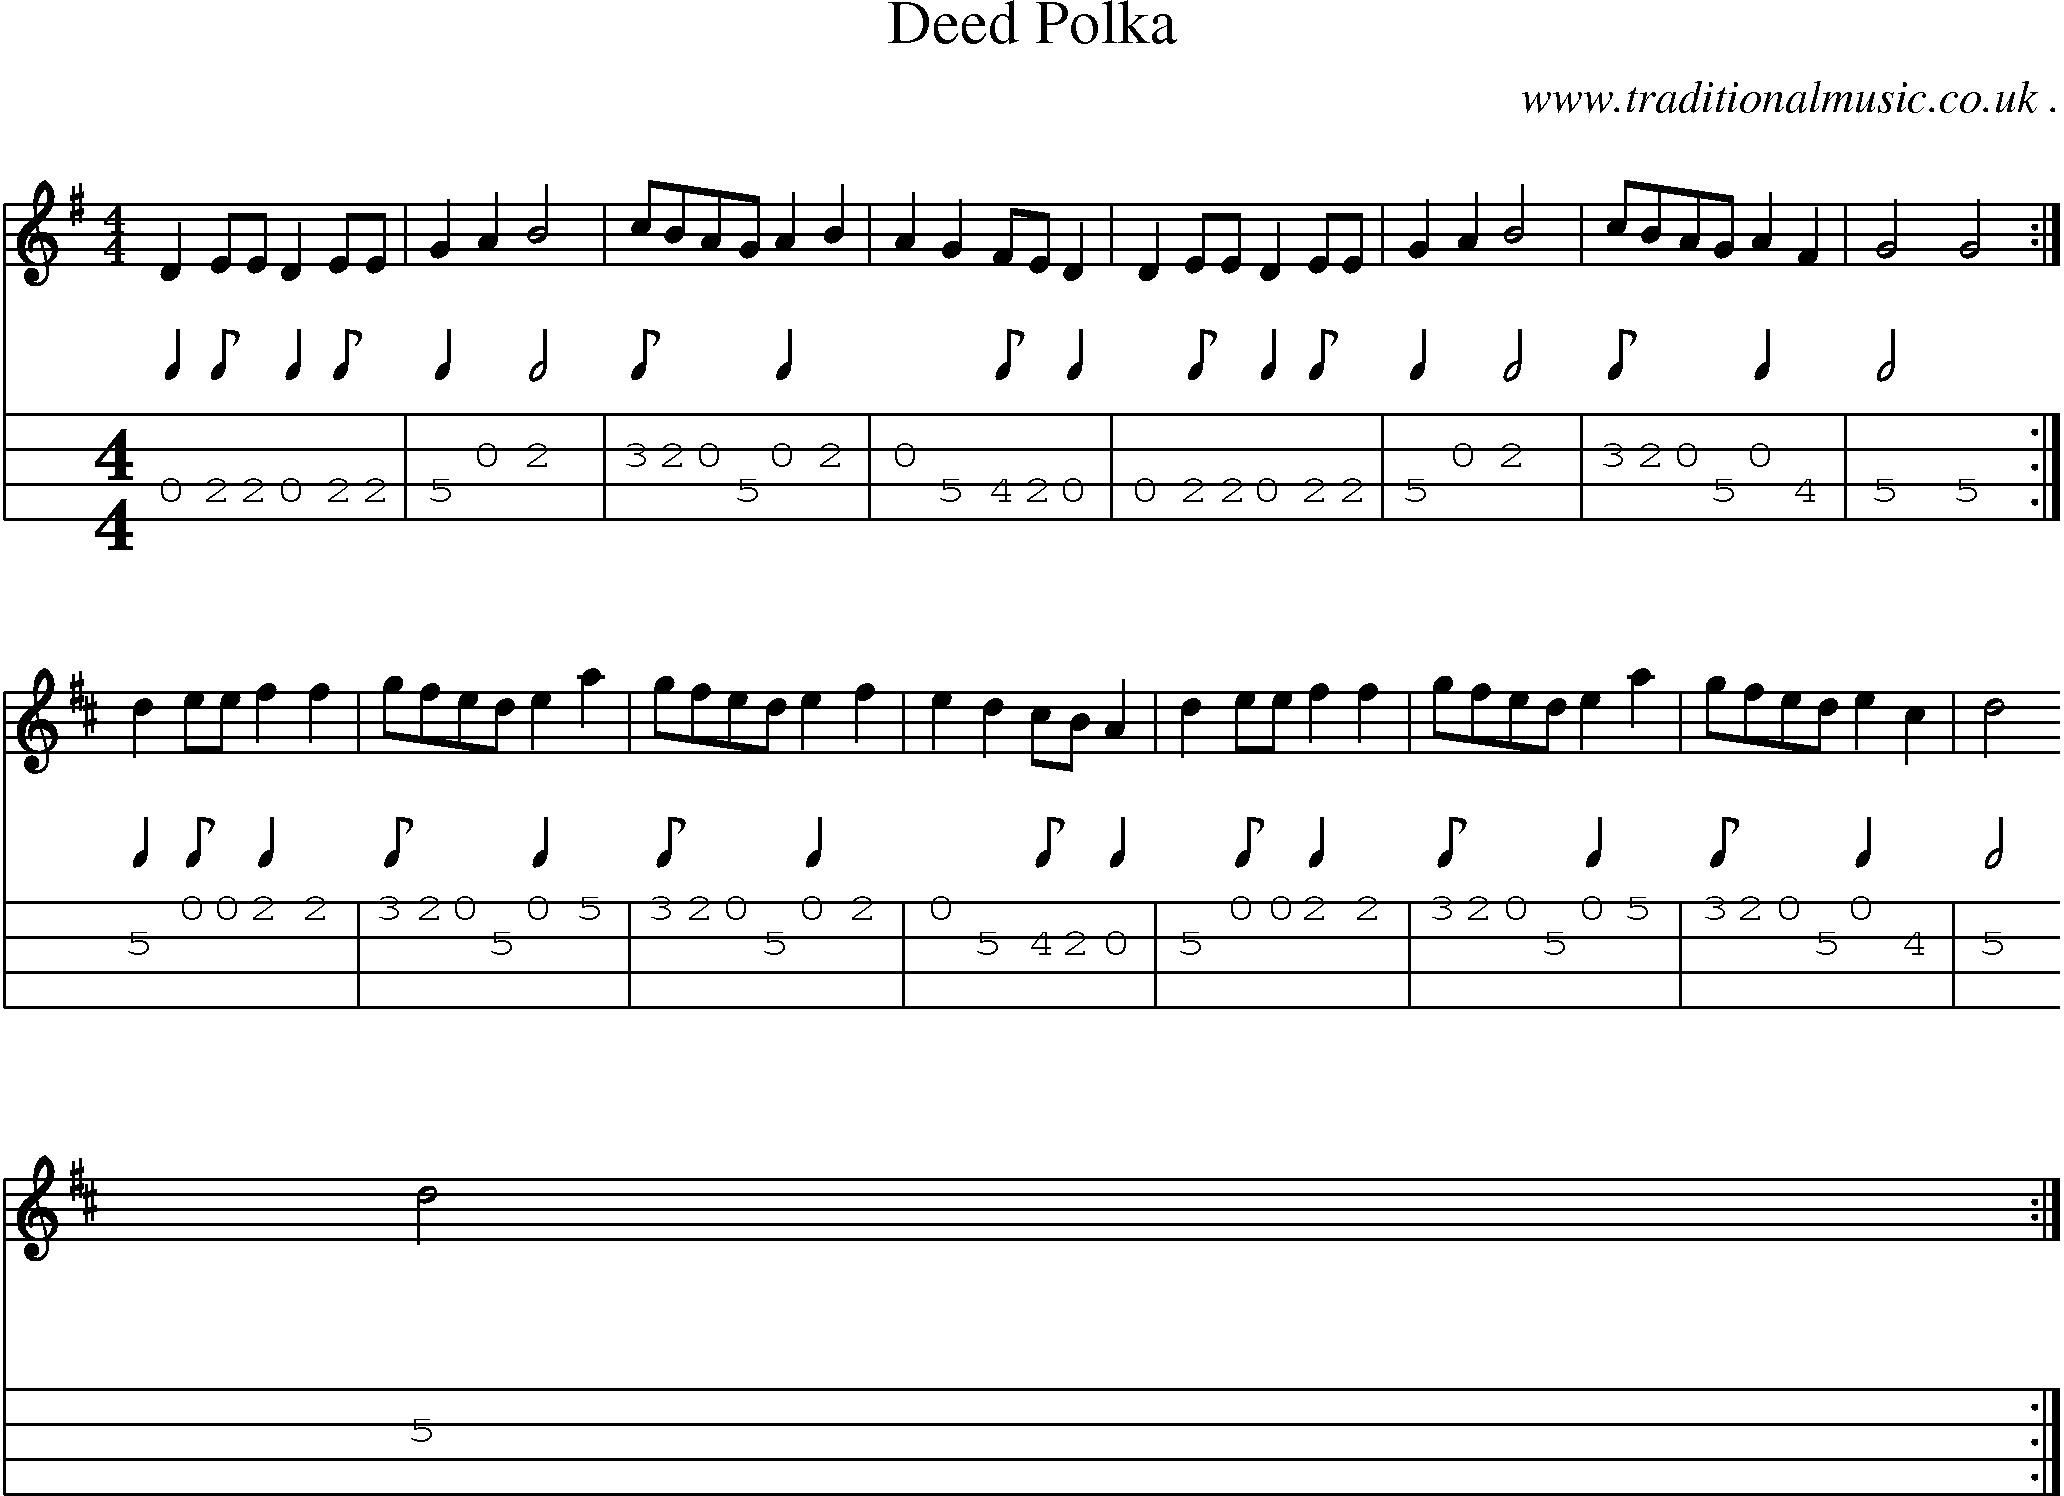 Sheet-Music and Mandolin Tabs for Deed Polka